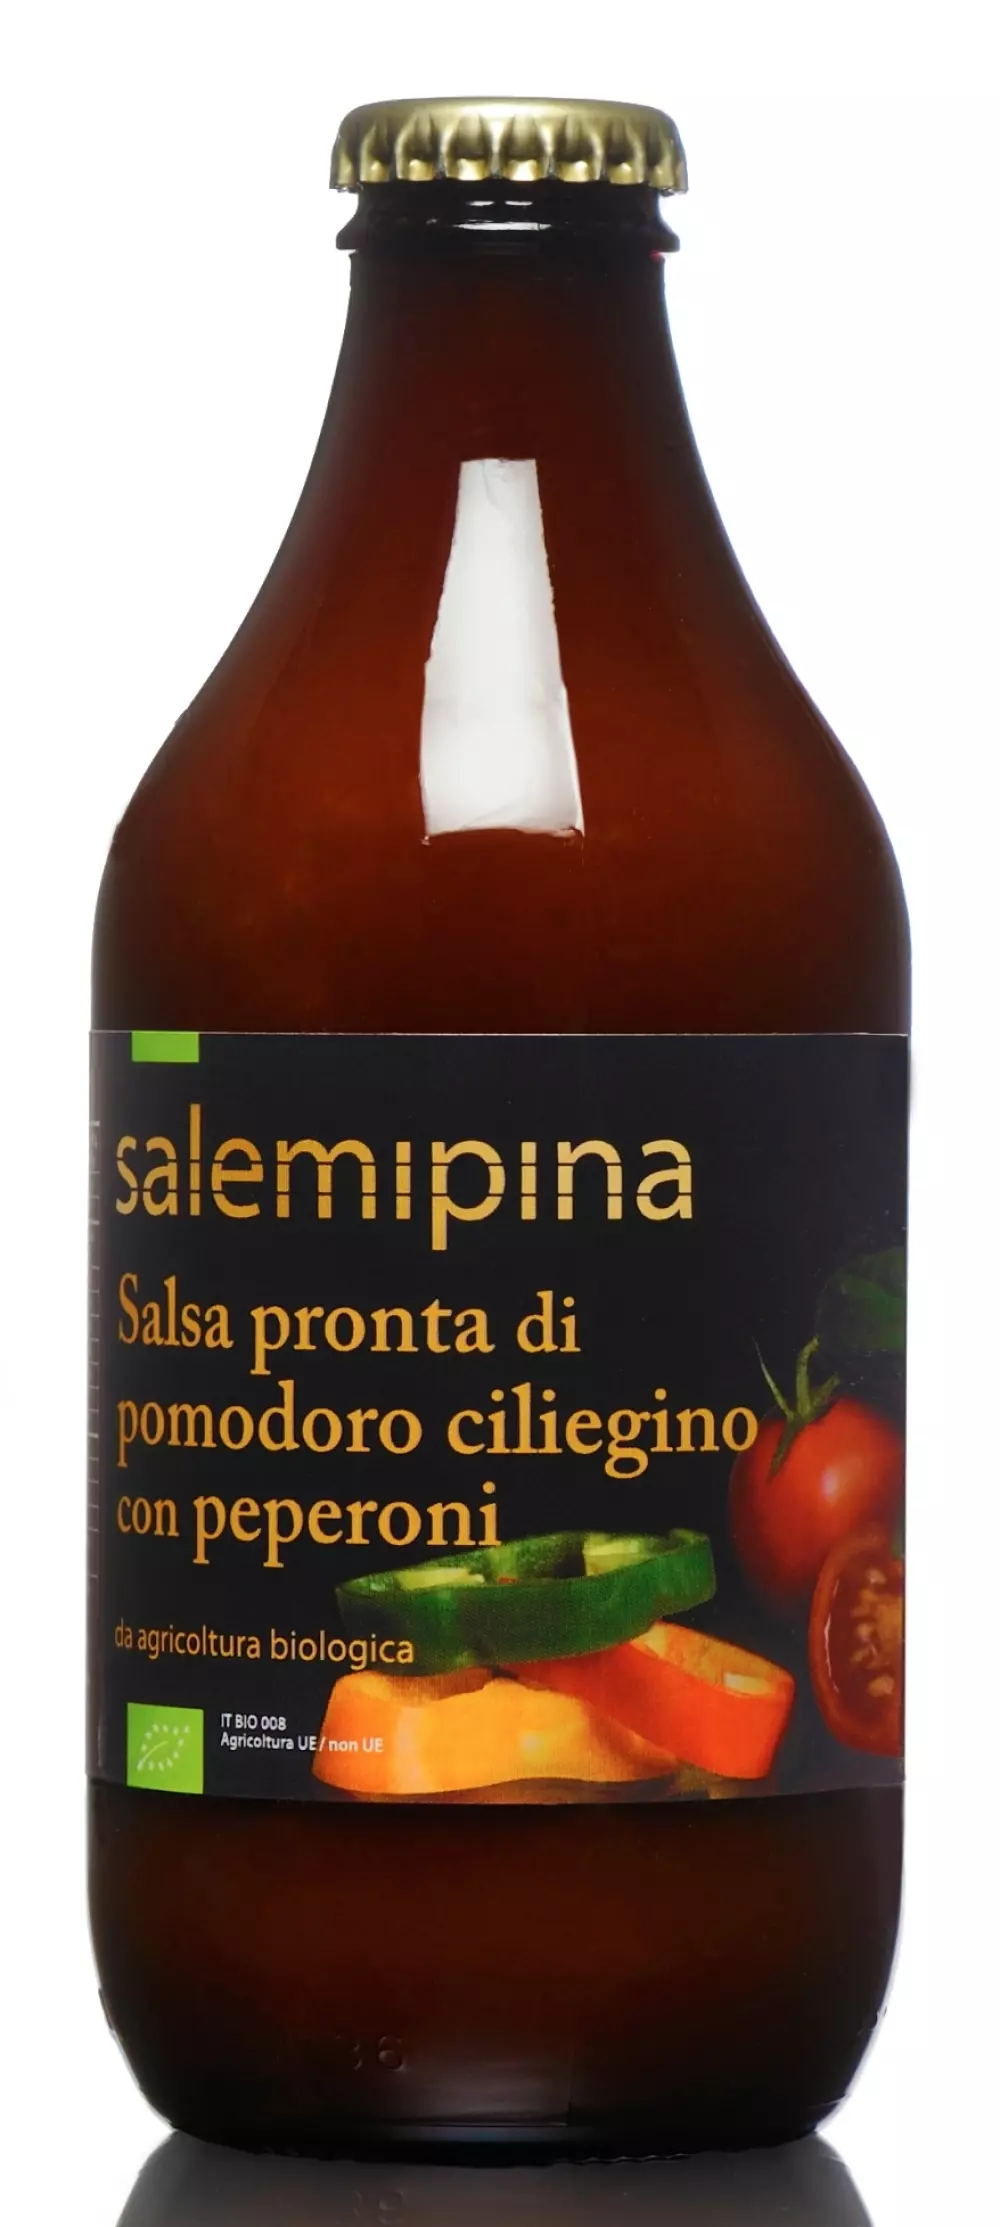 Sugo di ciliegino con peperoni BIO 250g. - Salemi Pina, 8032618863007, 80748807, Pastasaus, 100% tomater, Salemi Pina, 3007, Økologisk tomatsaus med paprika 250g